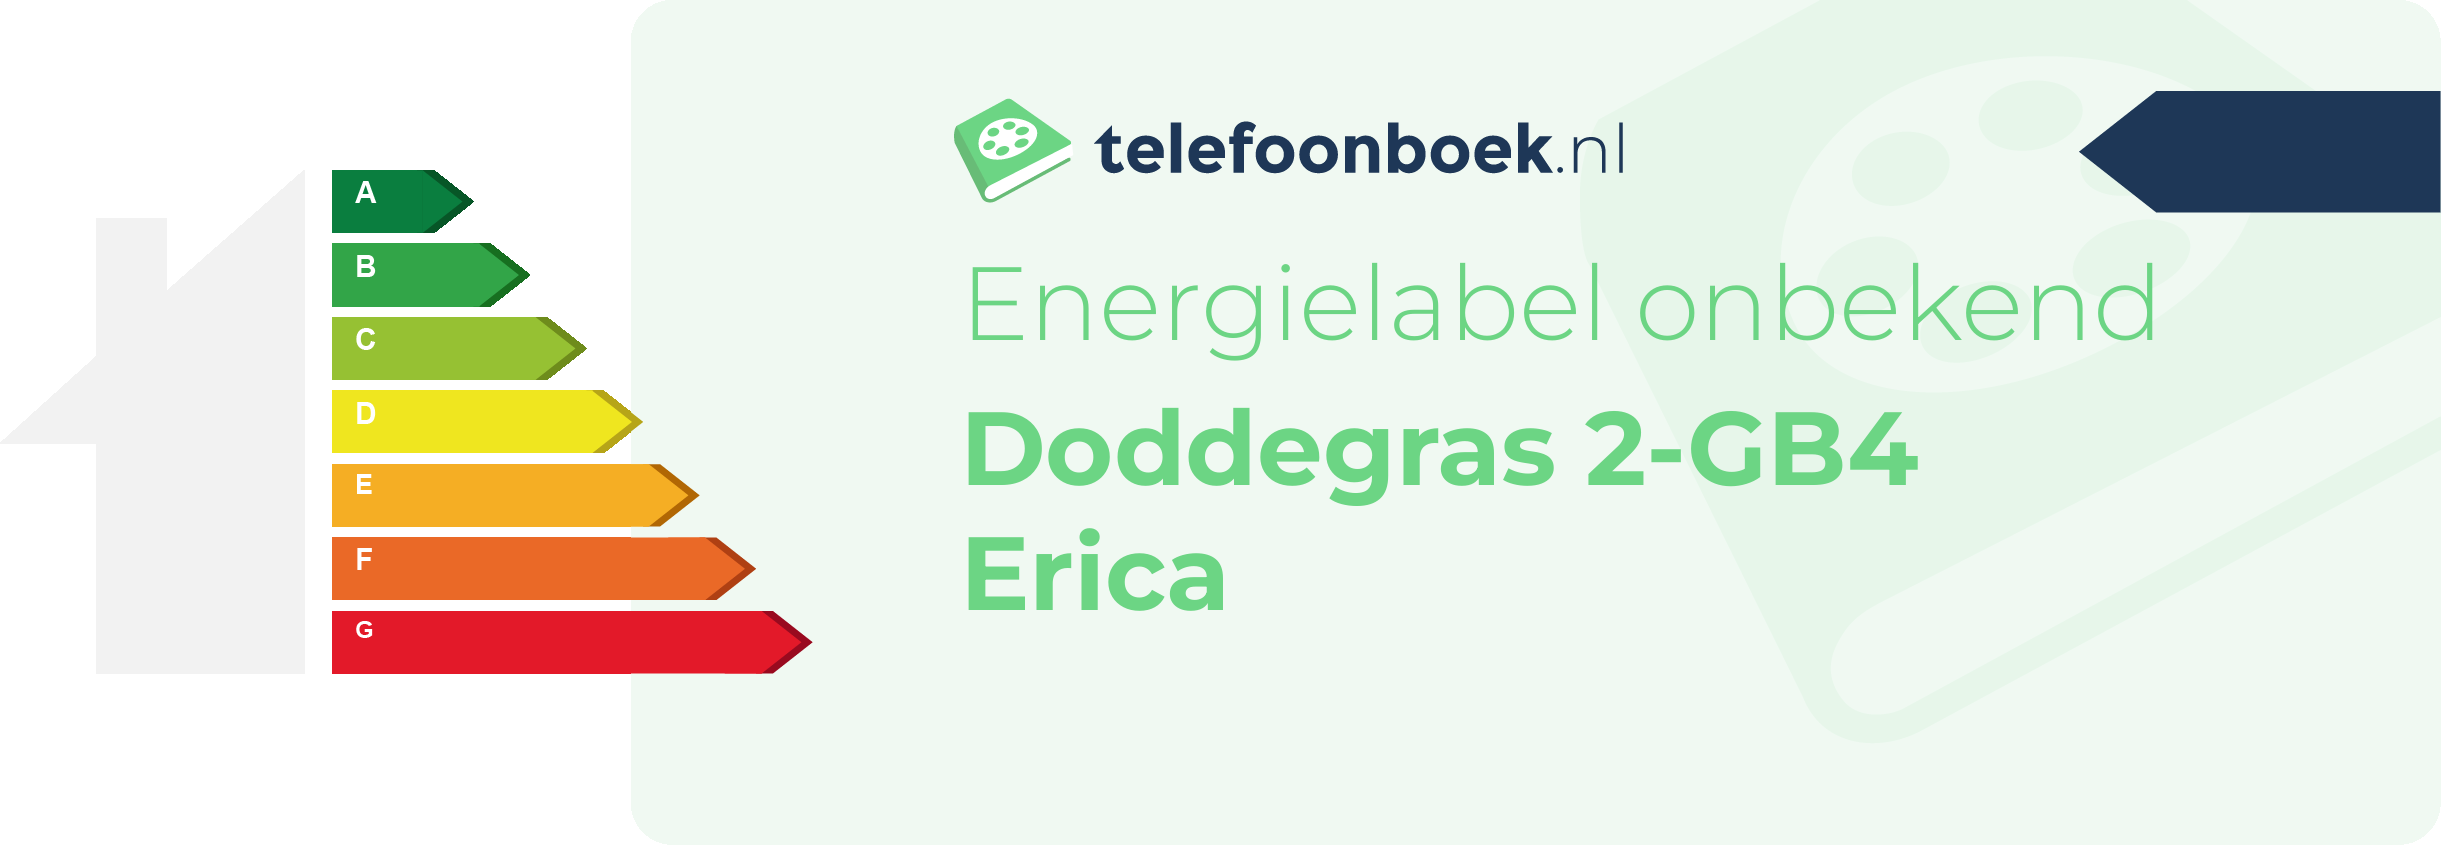 Energielabel Doddegras 2-GB4 Erica